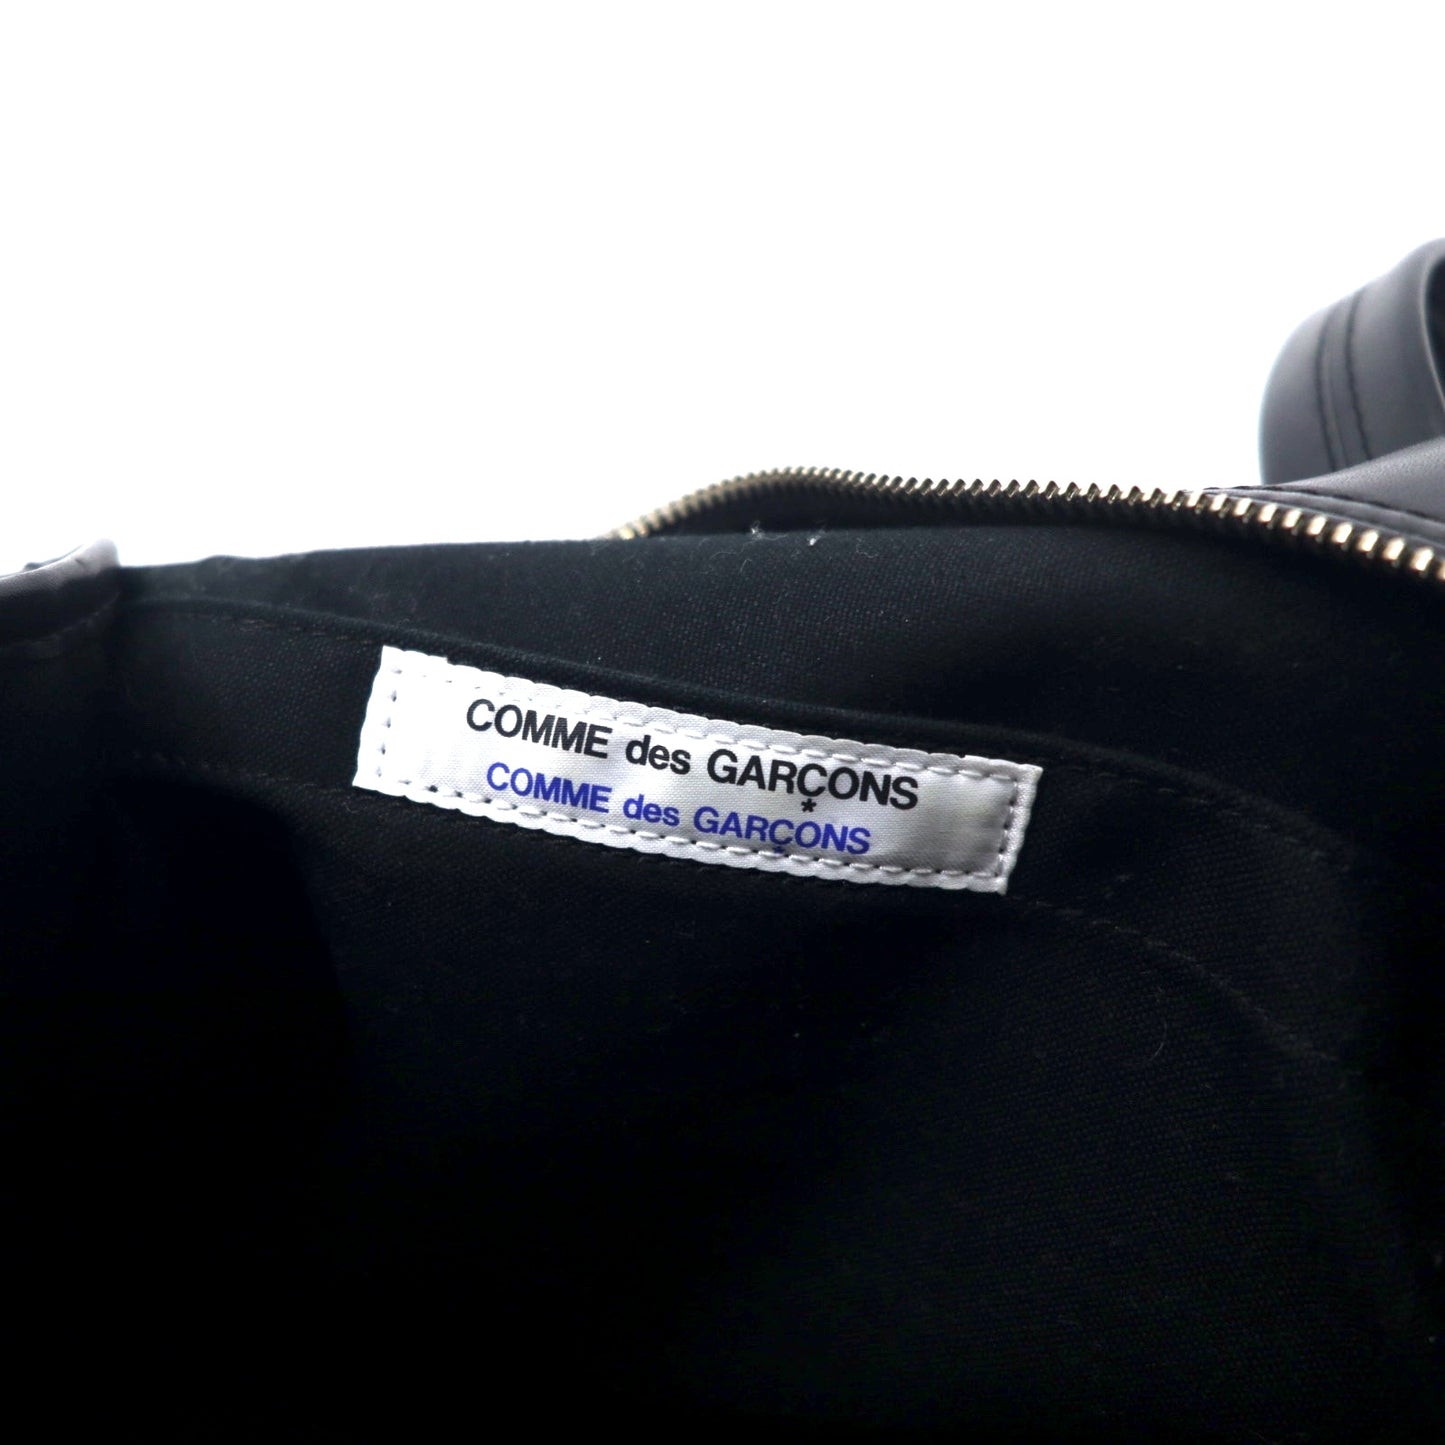 COMME des GARCONS COMME des GARCONS ボストンバッグ ハンドバッグ ブラック PVC 台形 W16SC01